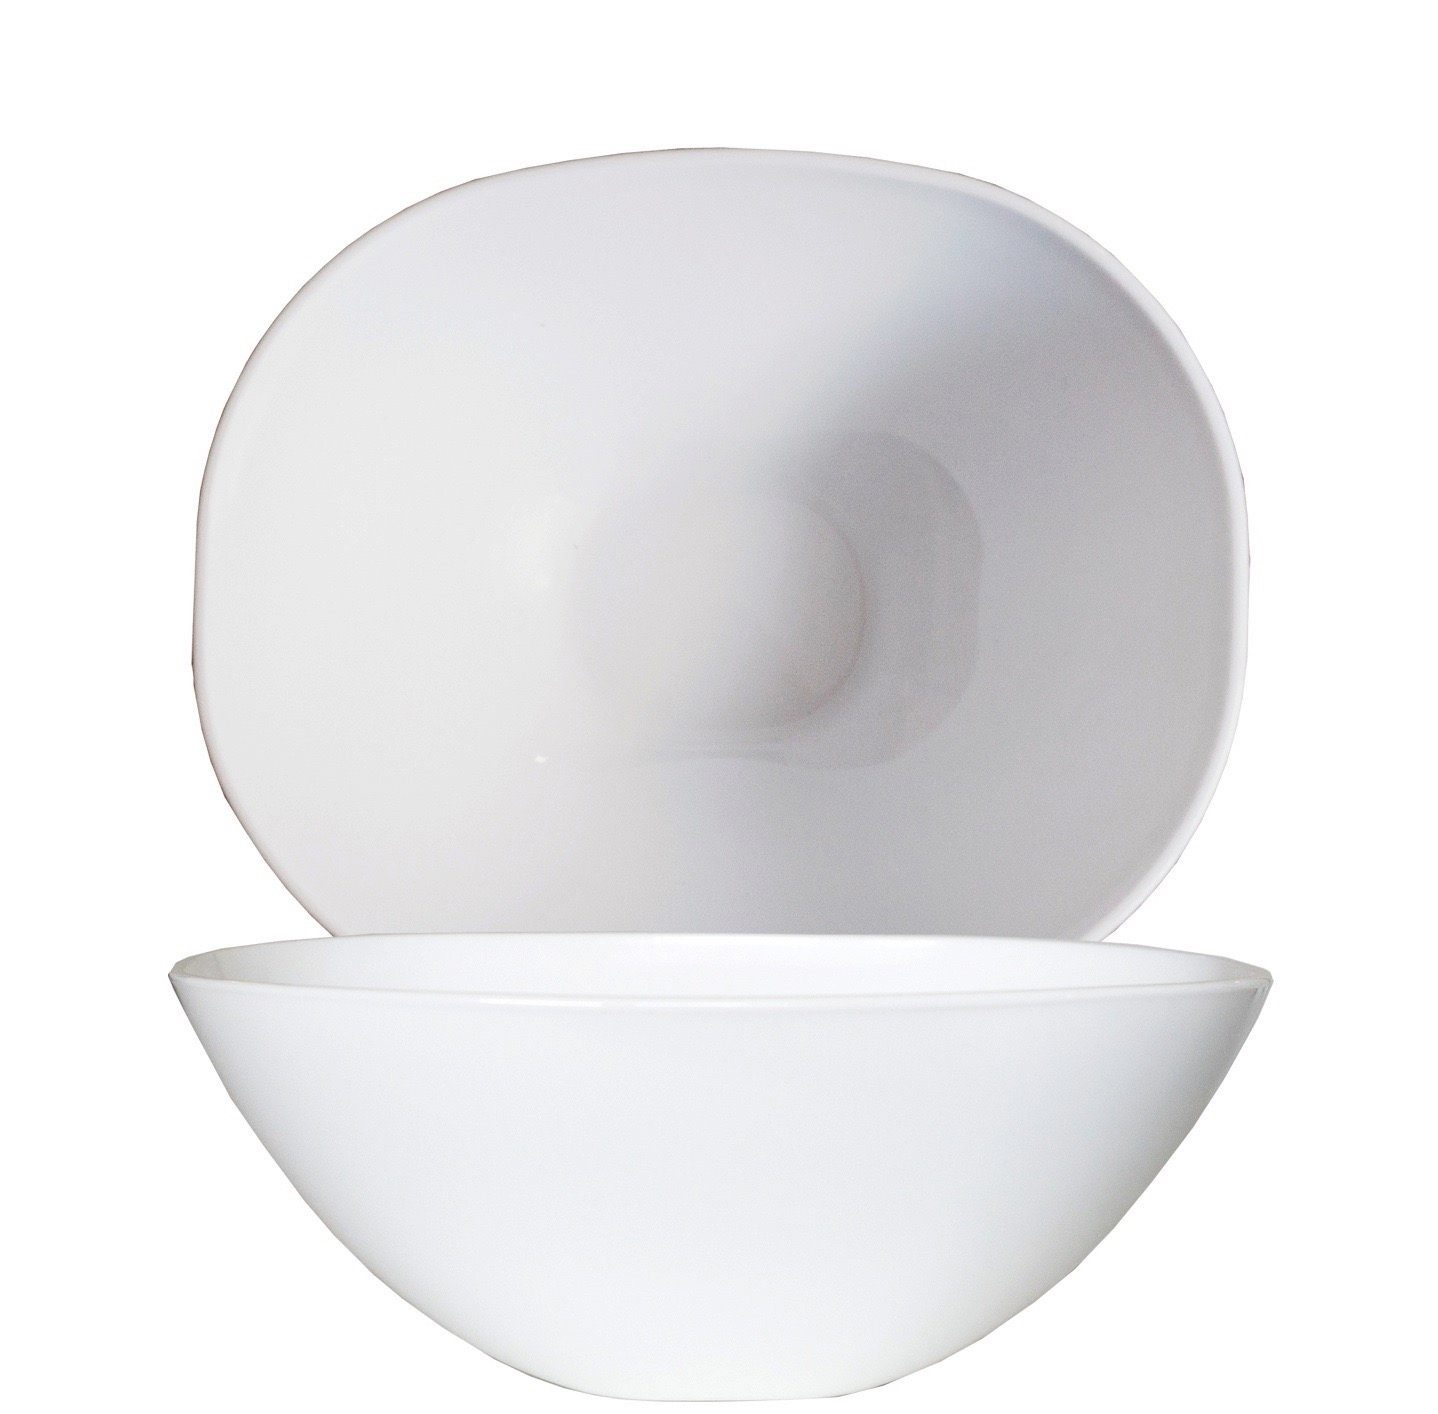 Arcoroc Salatschüssel »Solutions Uni«, Opalglas, Schale Salatschale  Schüssel 25cm Opalglas weiß 1 Stück online kaufen | OTTO